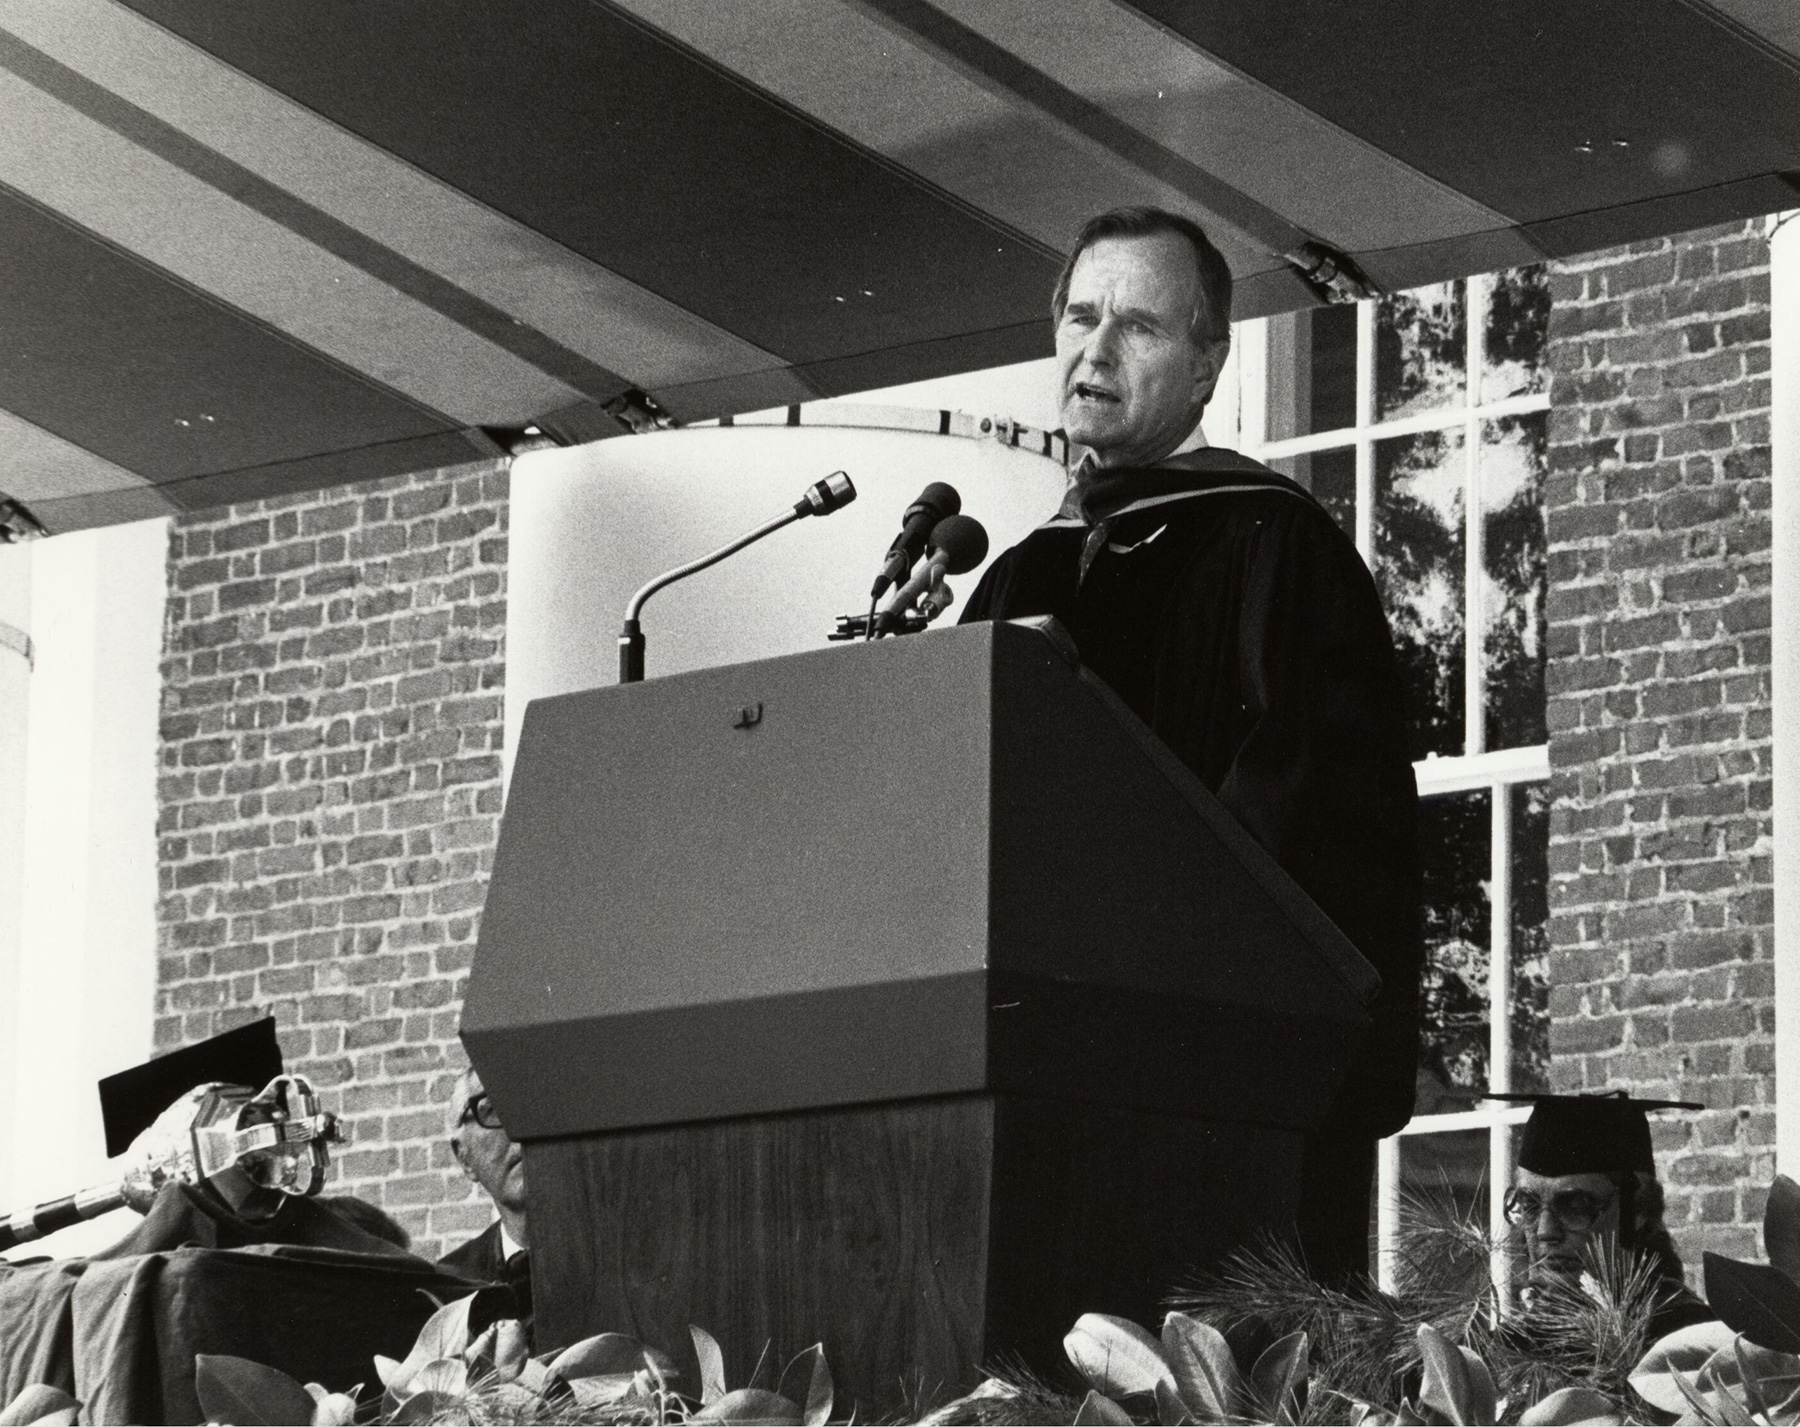 George HW Bush speaking at a podium